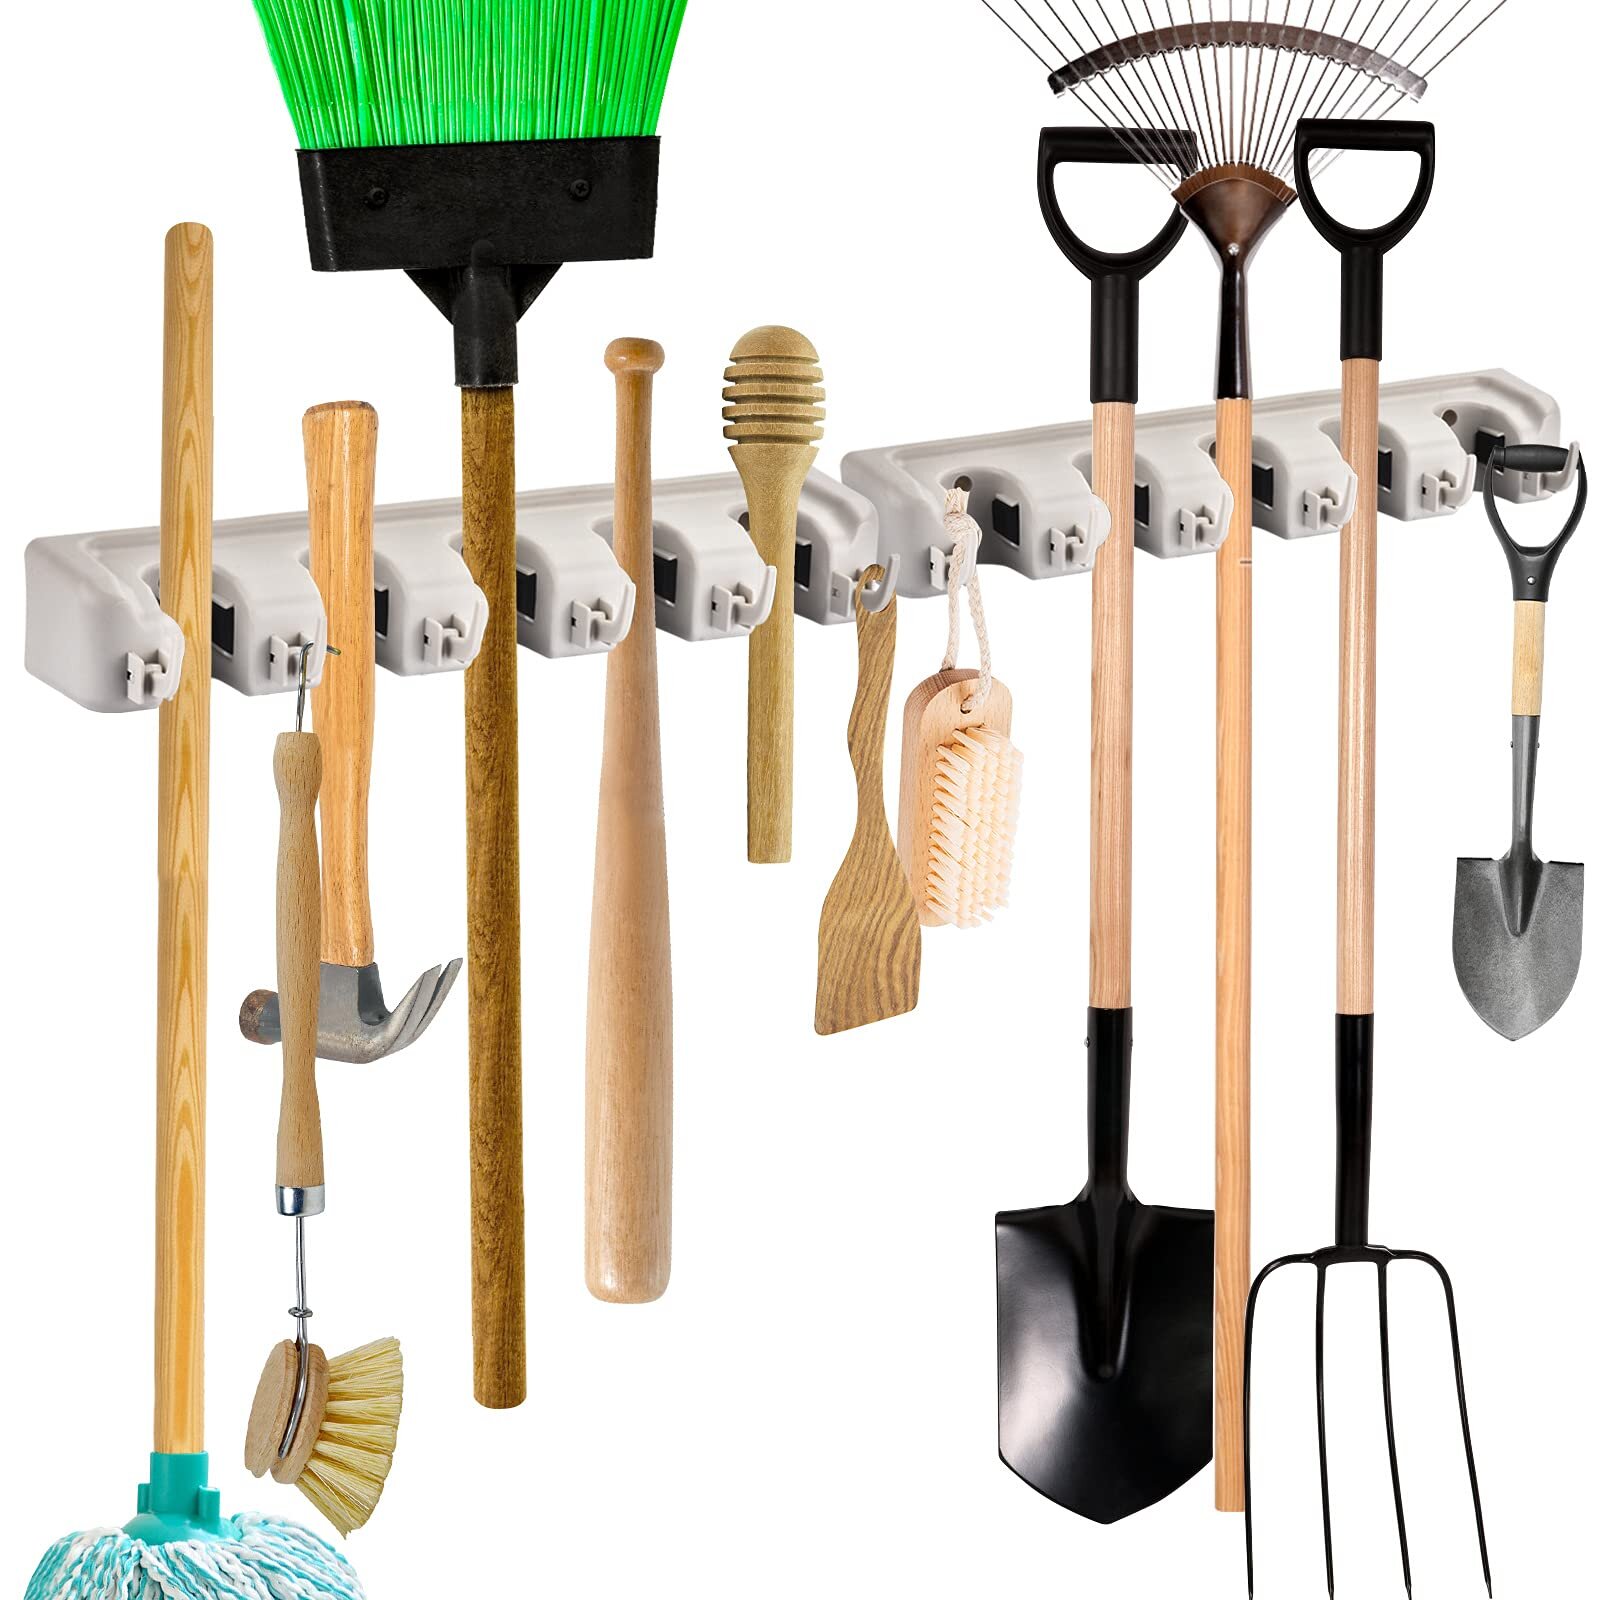 New Kitchen Mop Broom Holder Wall Mounted Organizer Brush Storage Hanger Tool